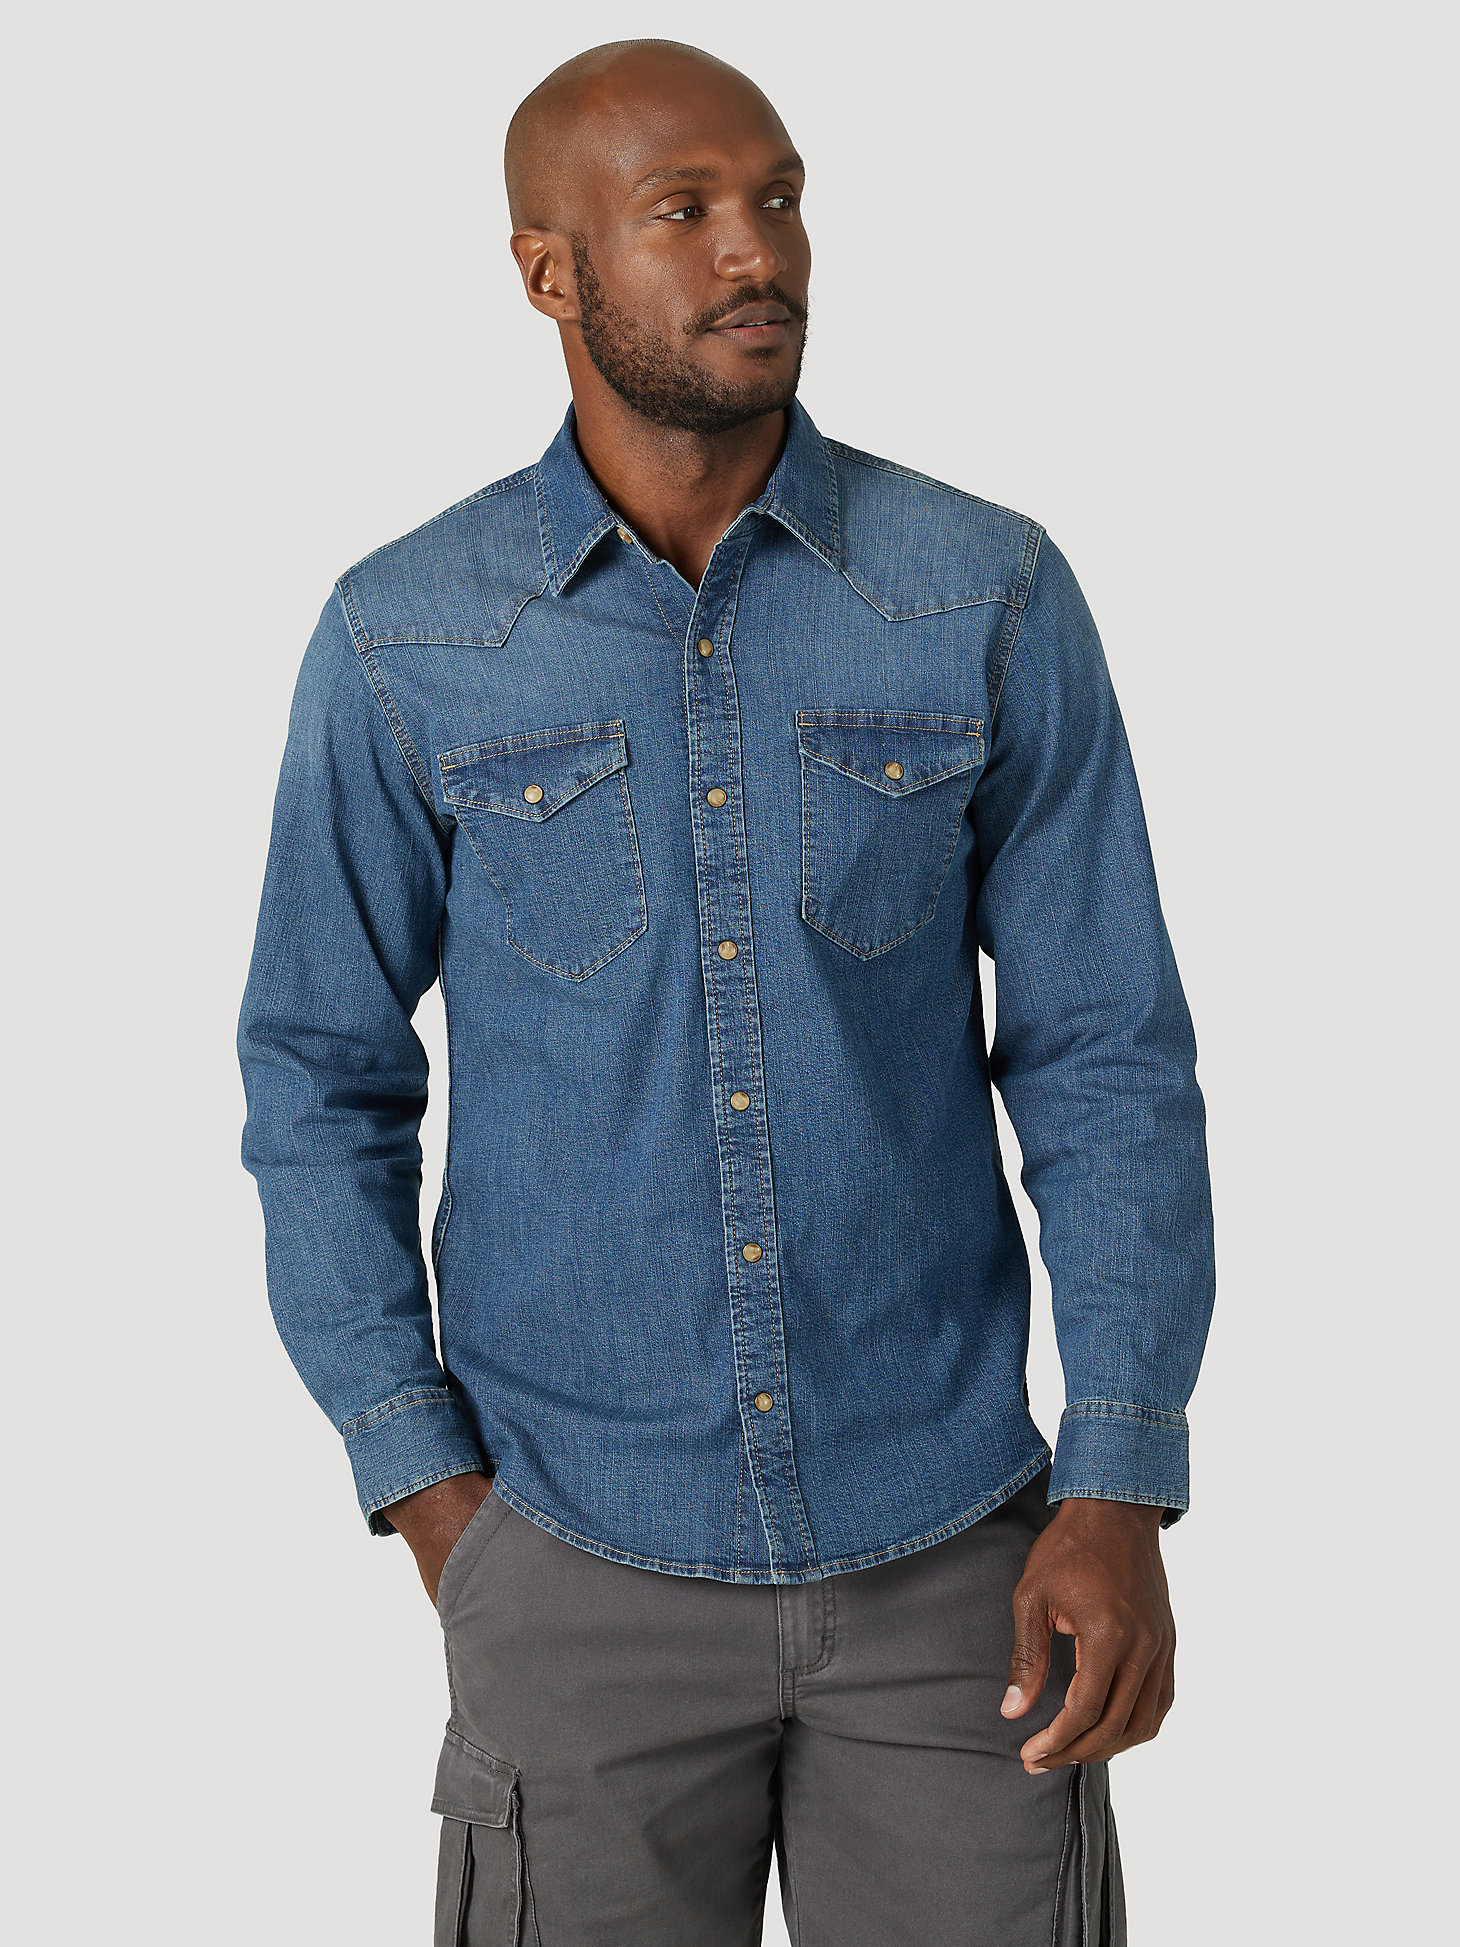 Mens Classic Denim Button Down Shirt Blue Size Superdry Men Clothing Shirts Denim Shirts S 